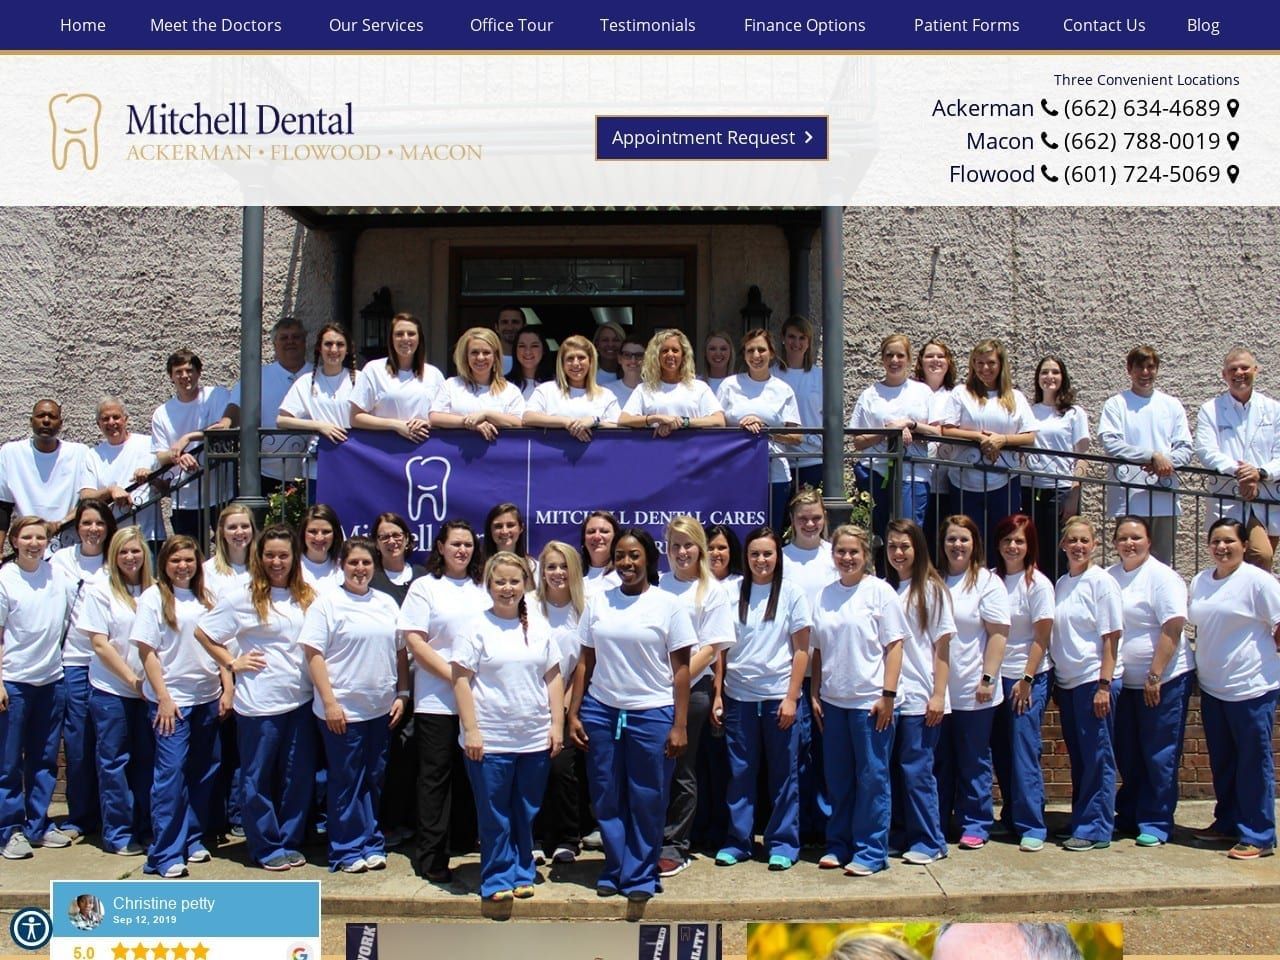 Mitchell Dental Clinic Website Screenshot from ackermandentist.com